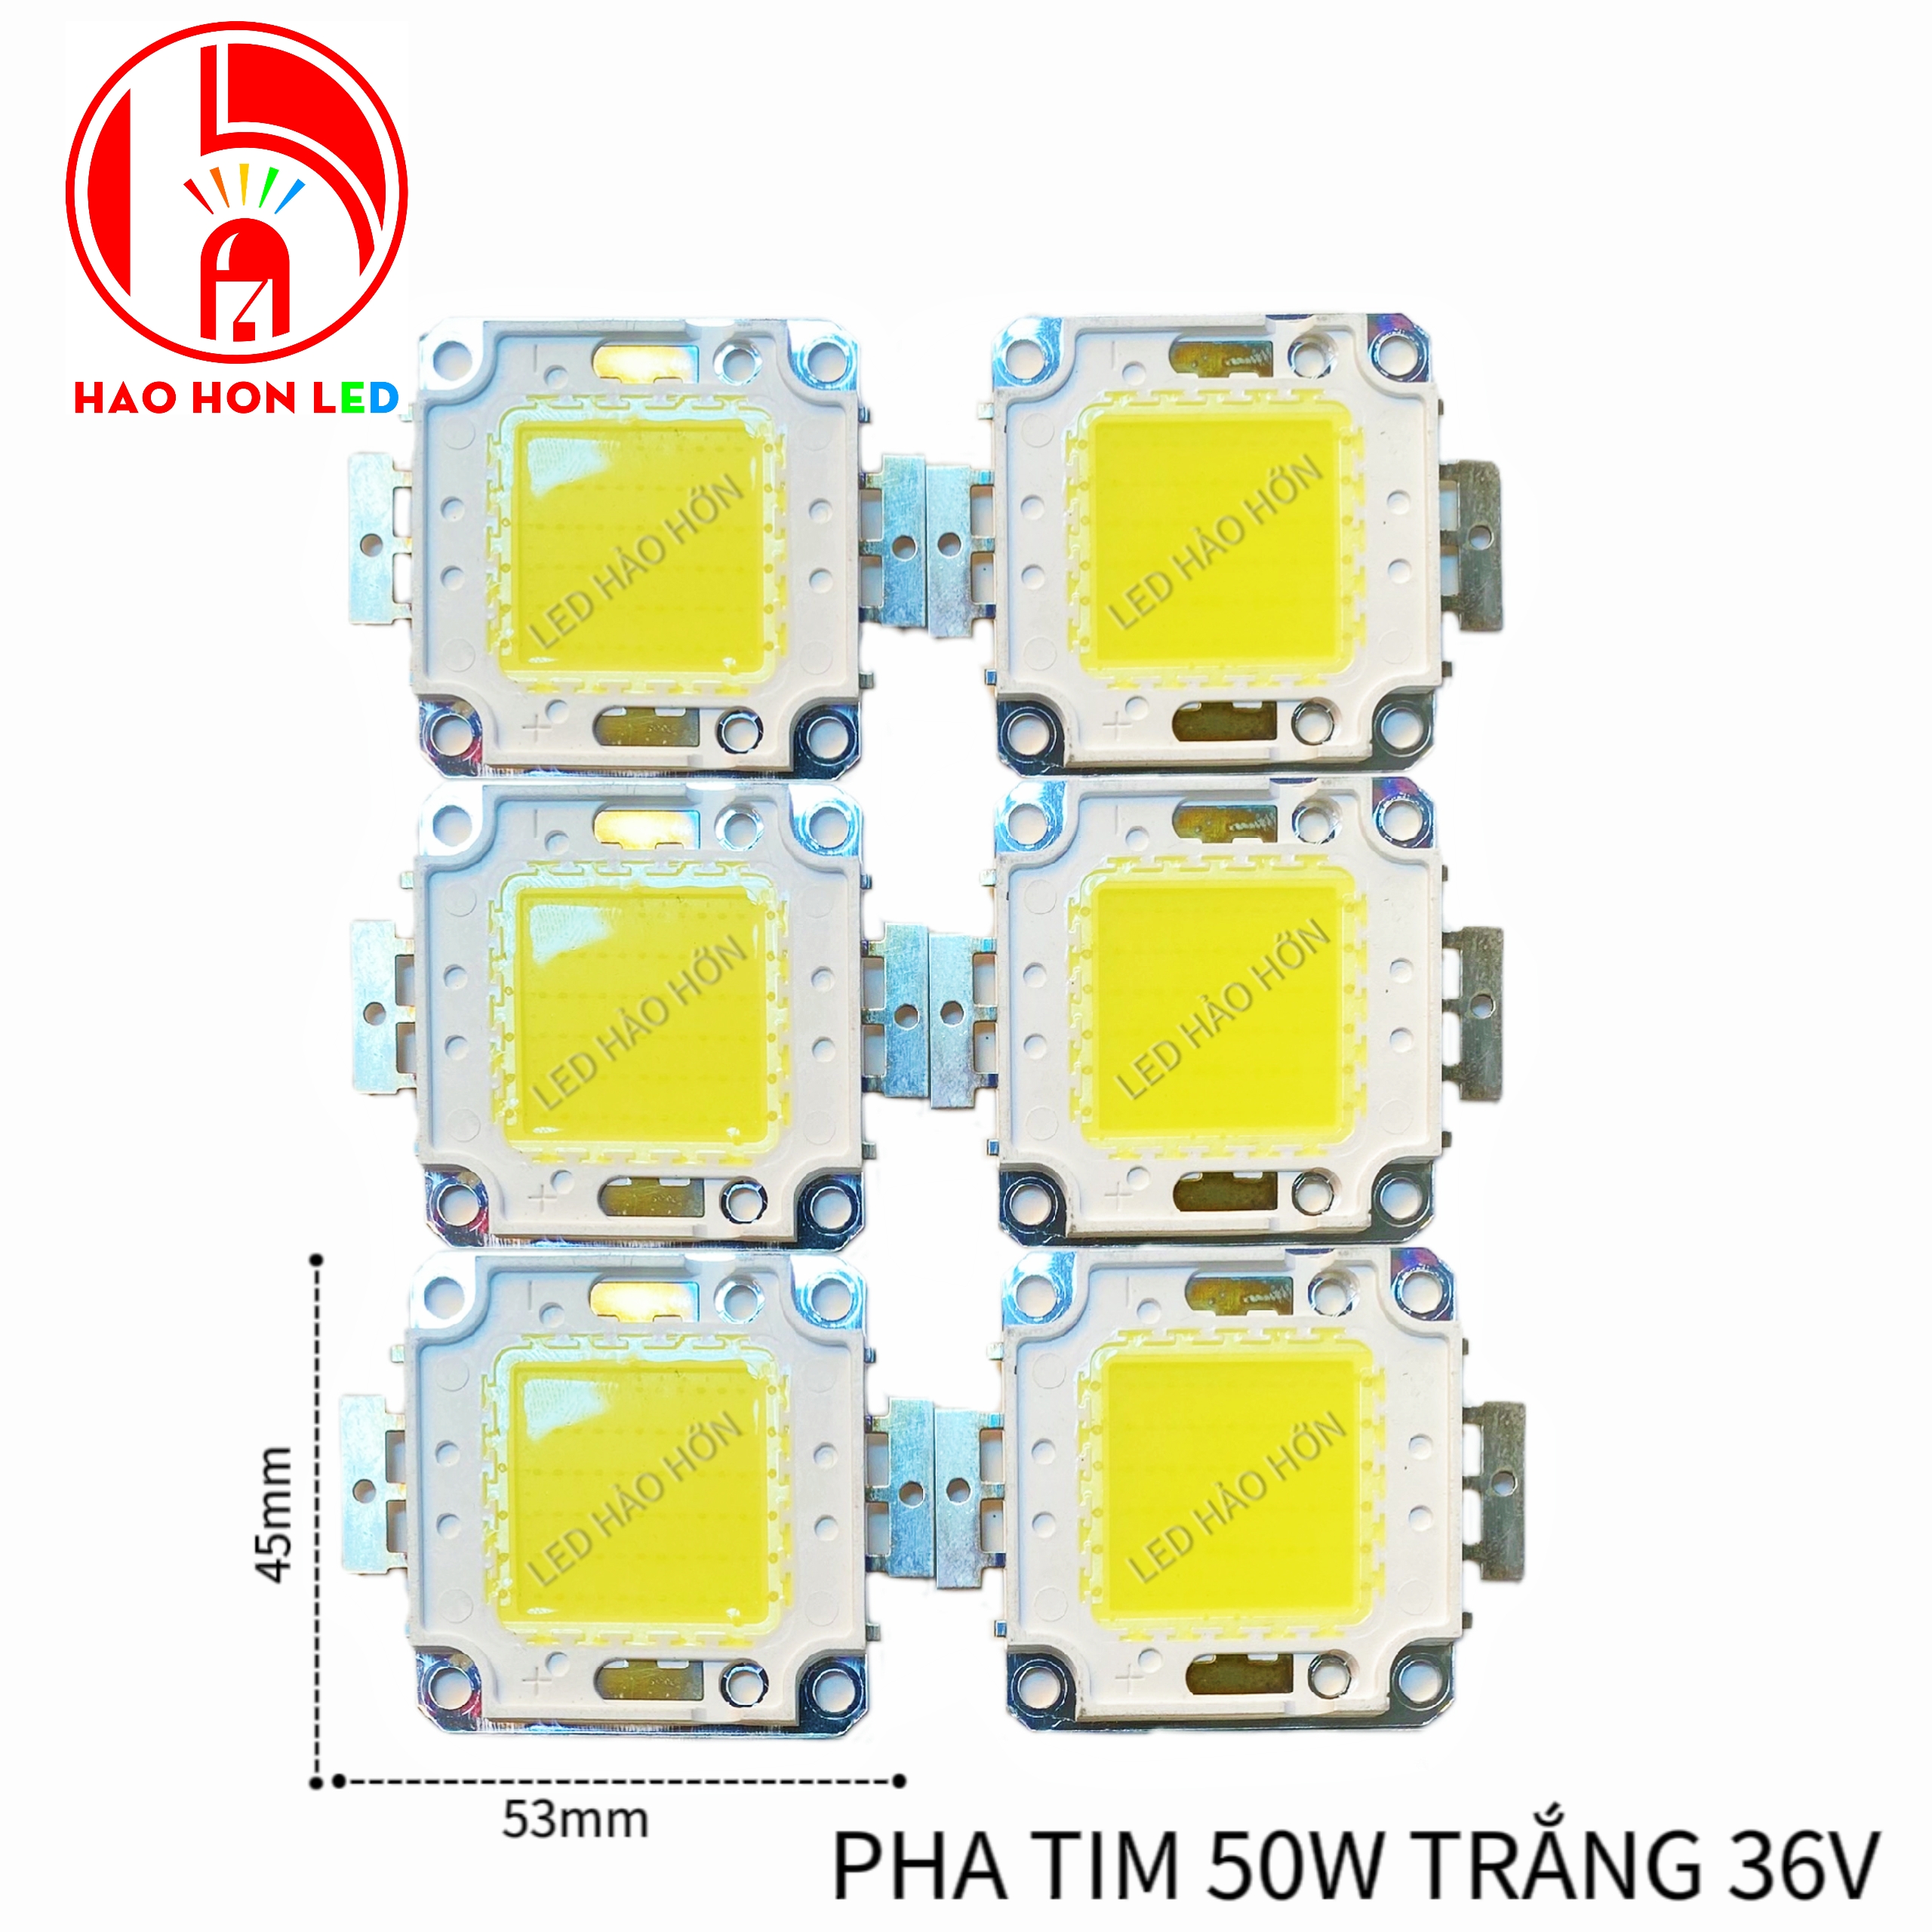 PHA TIM 50W TRẮNG 36V